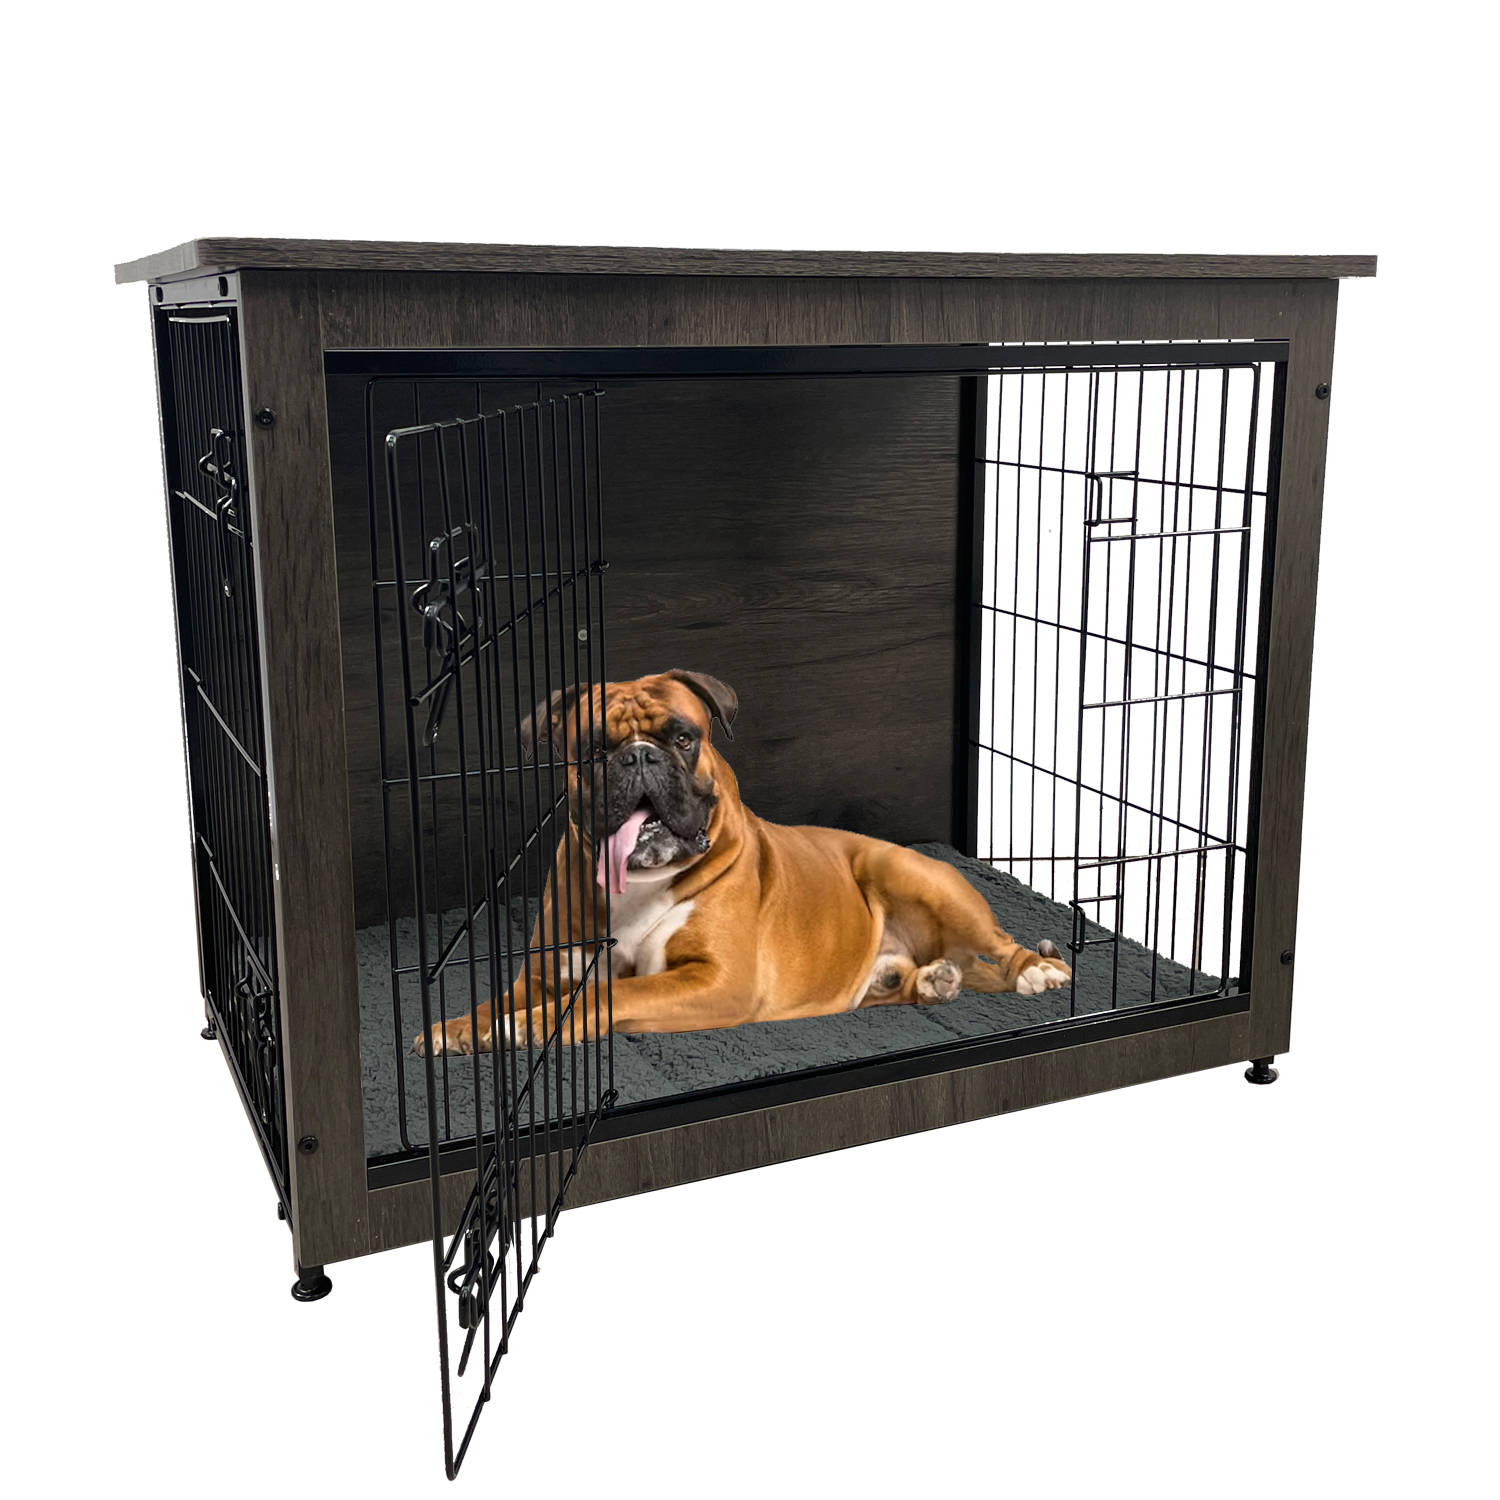 MaxxPet Houten Hondenbench - Hondenhuisje voor binnen - Hondenhok - kennel - 98x65x68cm